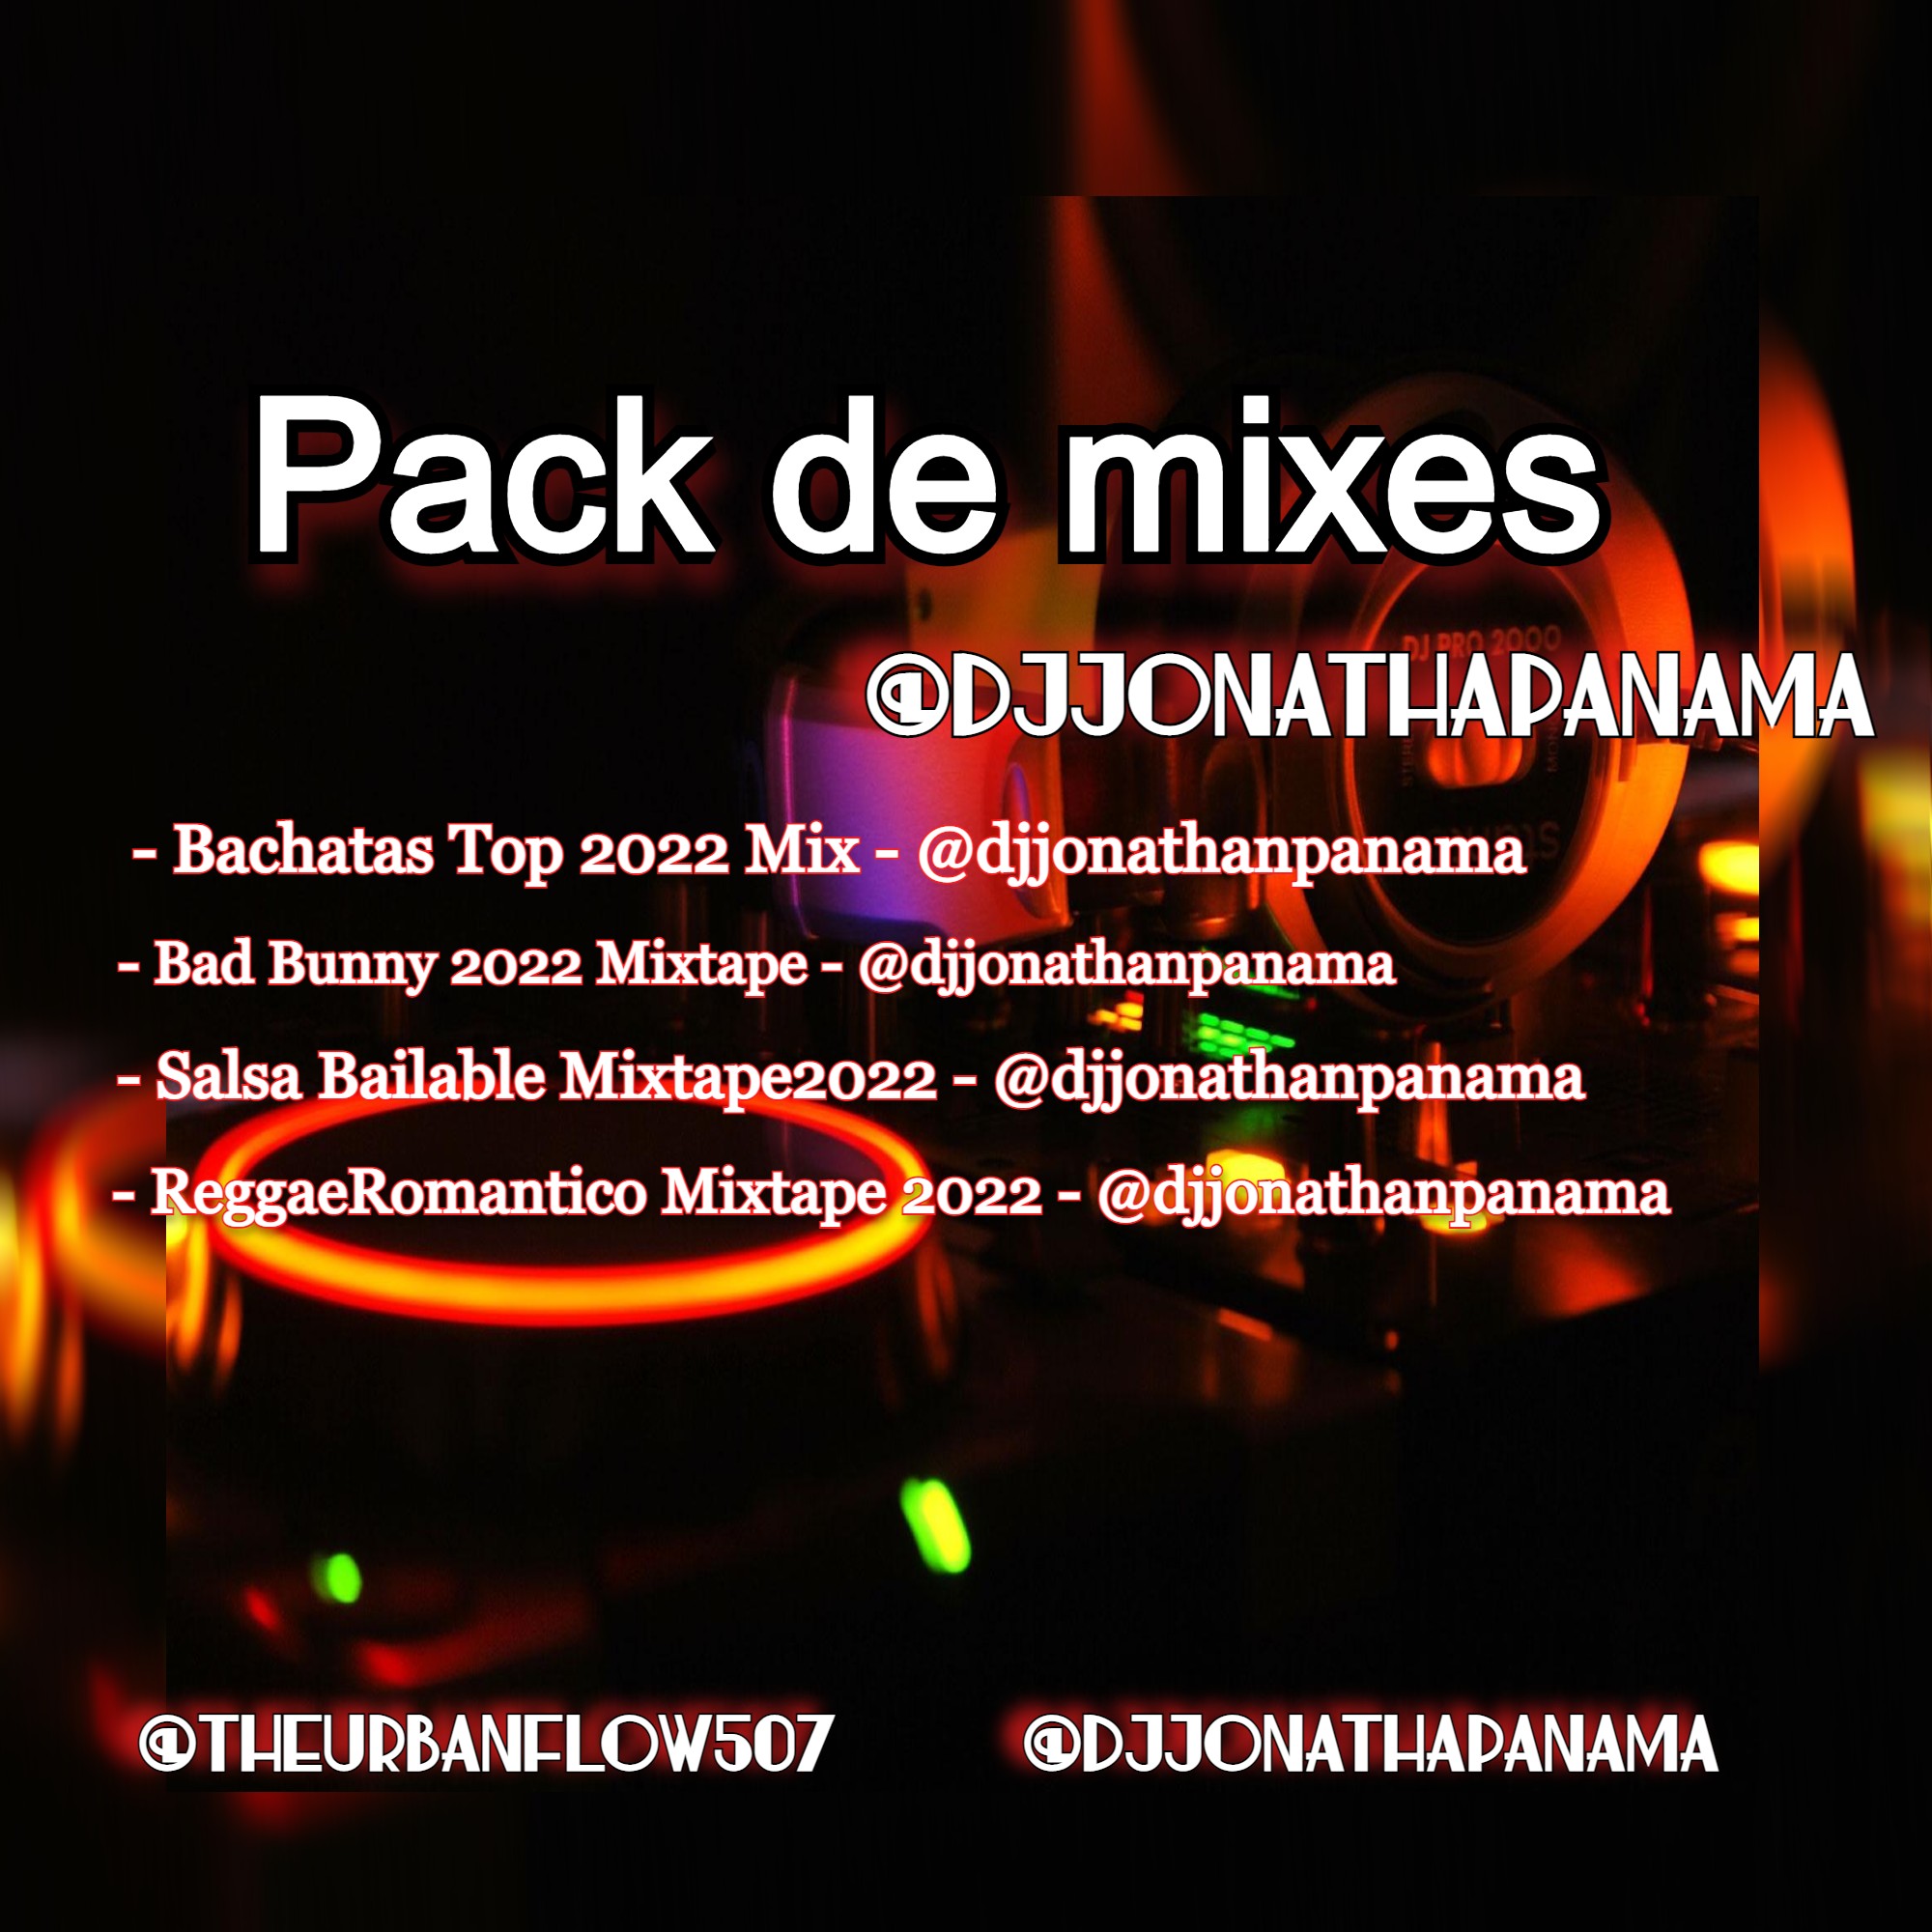 ReggaeRomantico Mixtape 2022 - @djjonathanpanama